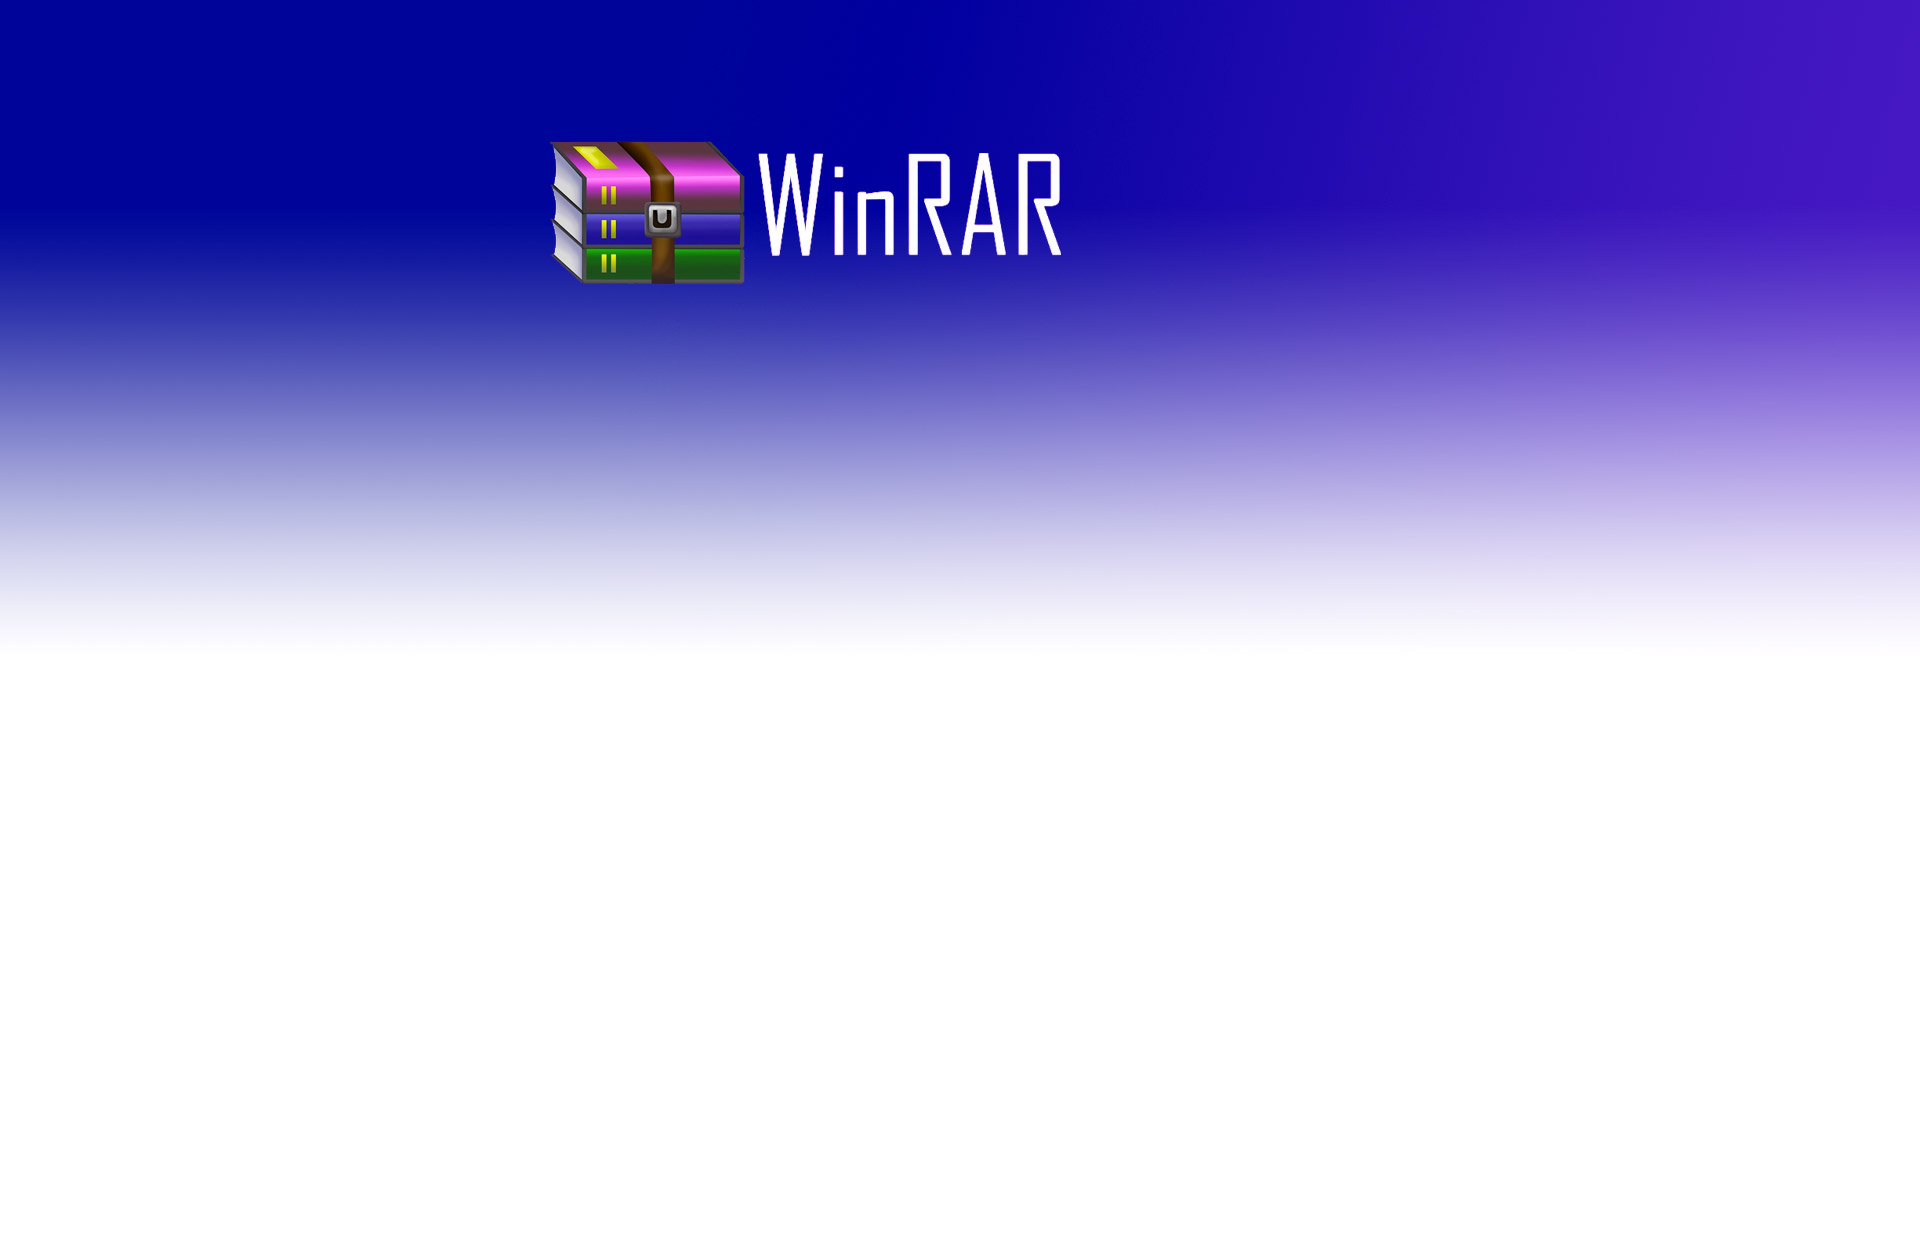 WinRAR 6.11